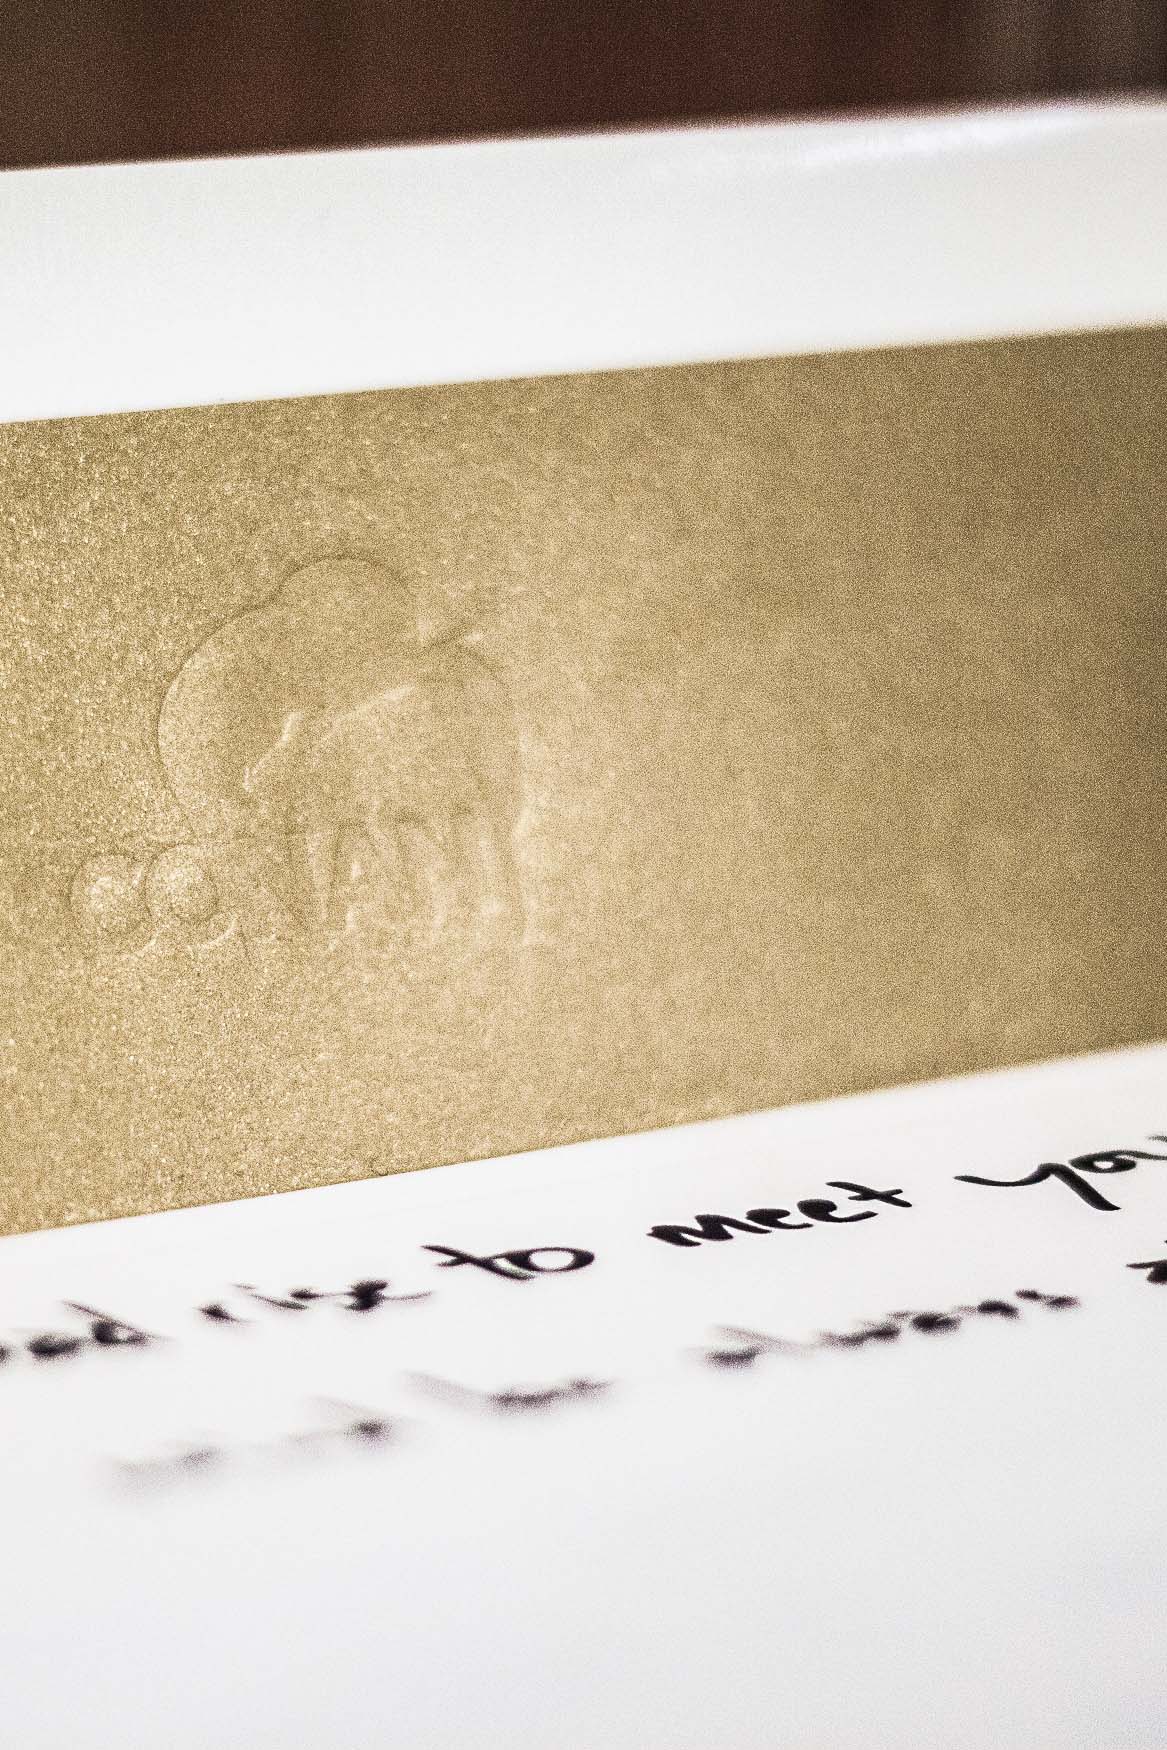 Conan O'Brien's Notecards - Corporate - A Fine Press